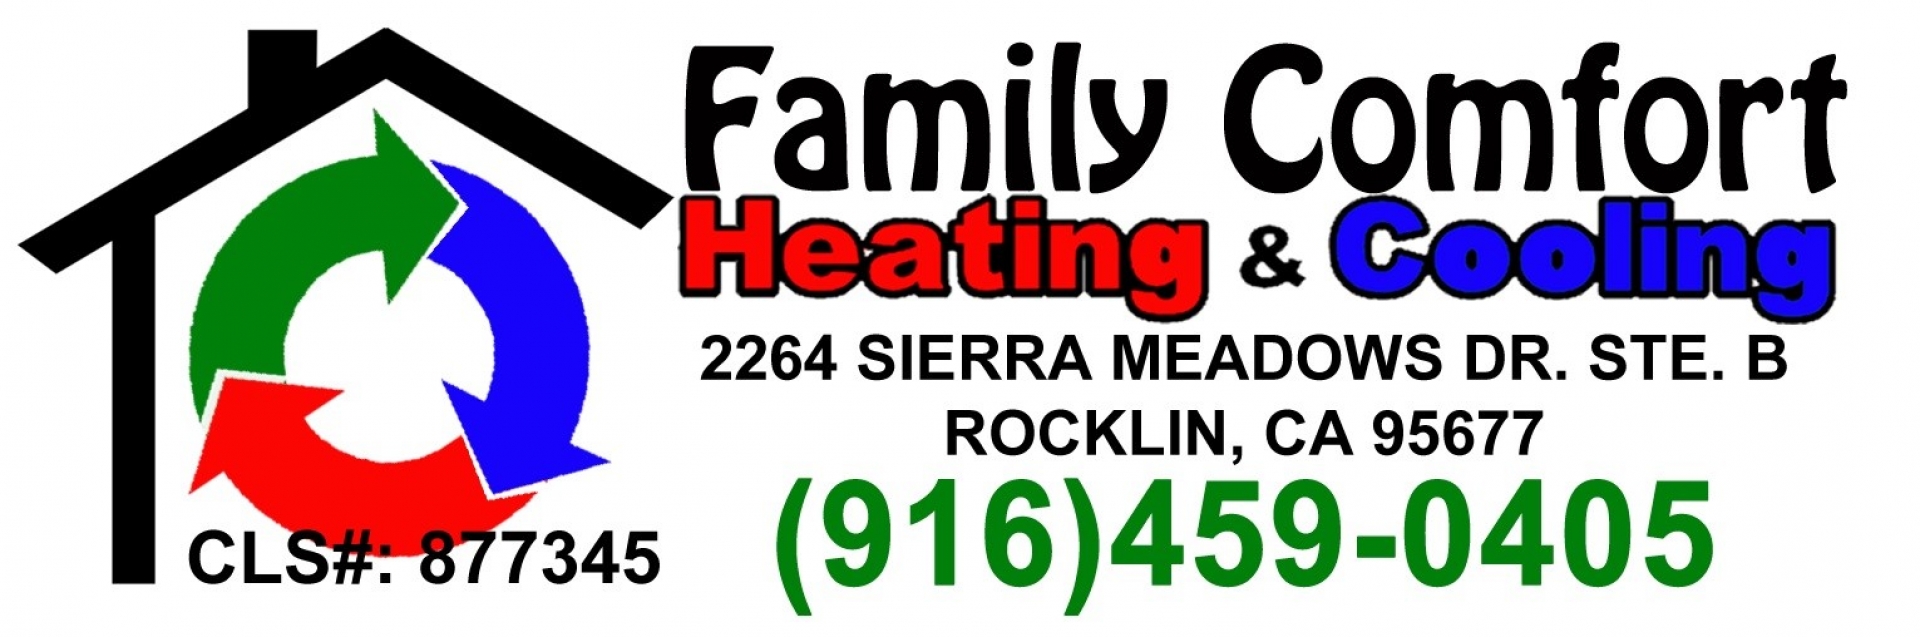 Family Comfort Heating & Cooling Inc company logo